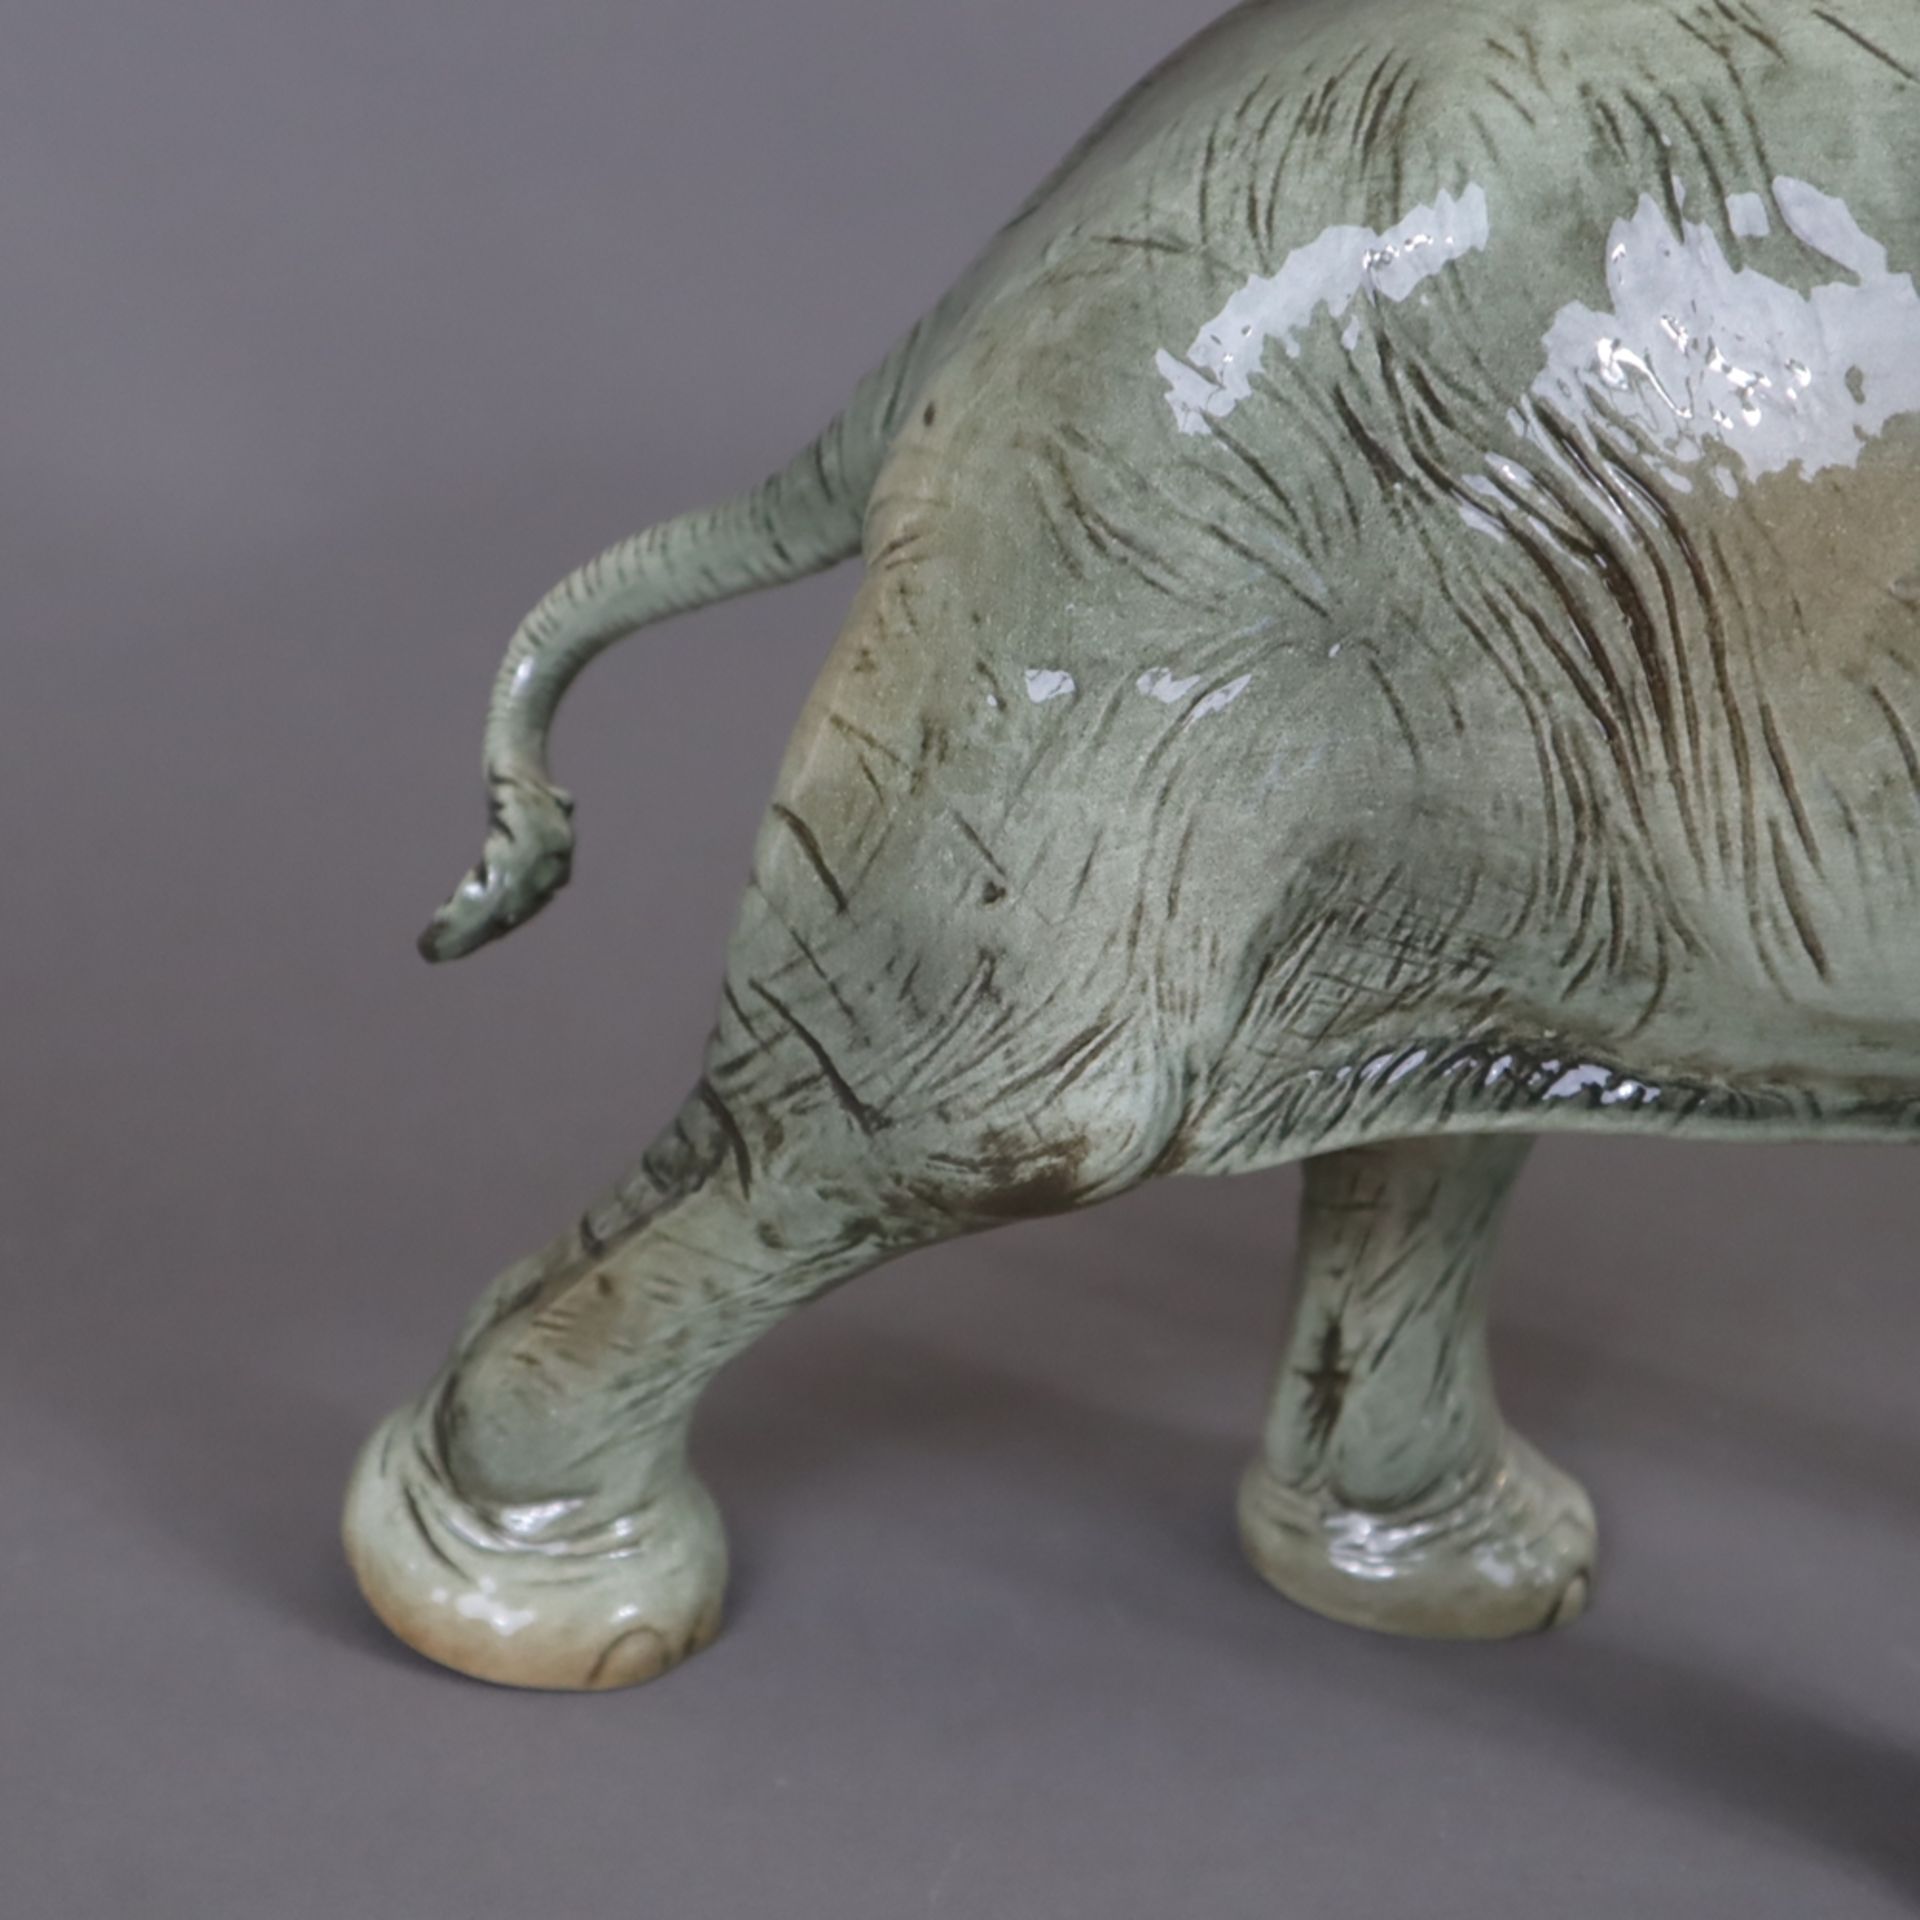 Große Tierfigur "Afrikanischer Elefant" - Goebel, aus der Figurenserie "Serengeti", Porzellan, natu - Image 3 of 8